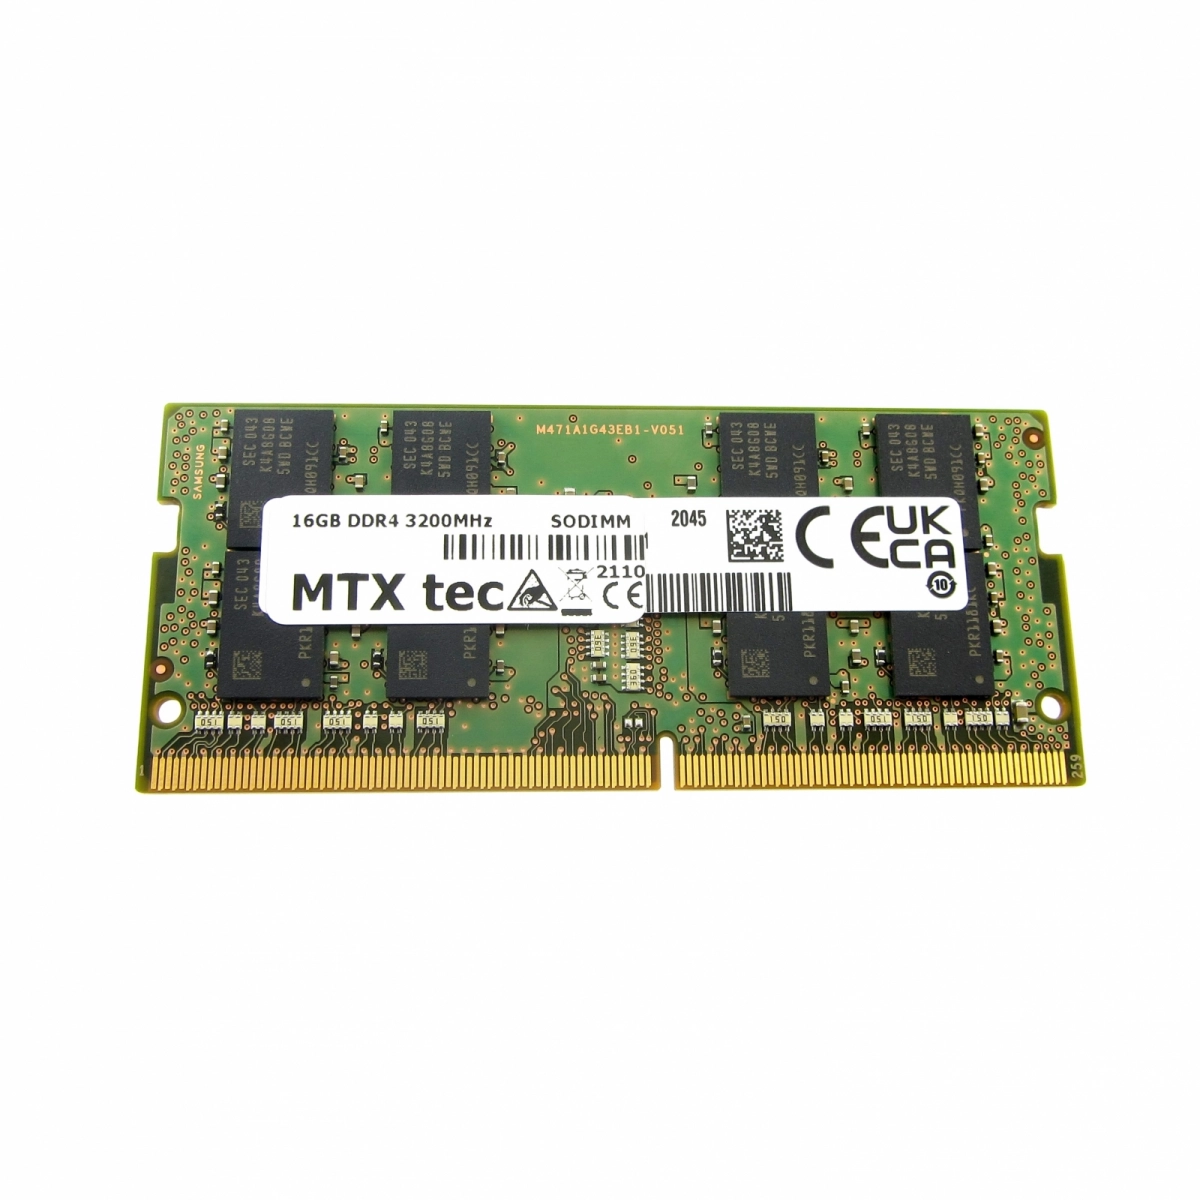 MTXtec 16GB DDR4-3200MHz PC4-25600 2Rx8 1024Mx8 16Chip 260pin CL22 1.2V SODIMM